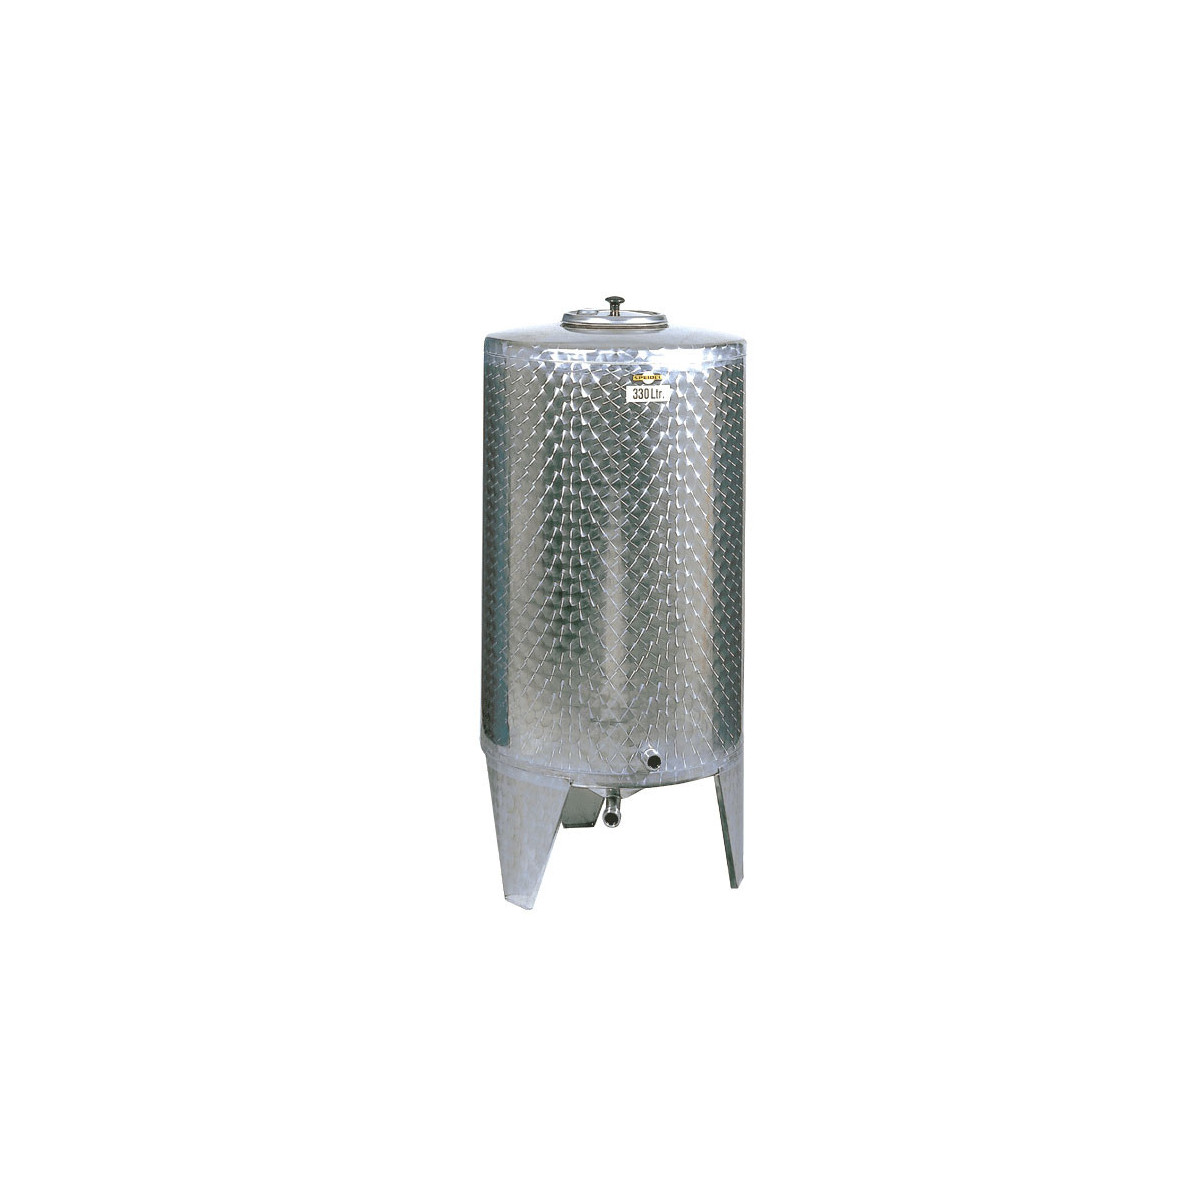 SPEIDEL fermentation tank FD 240 liters